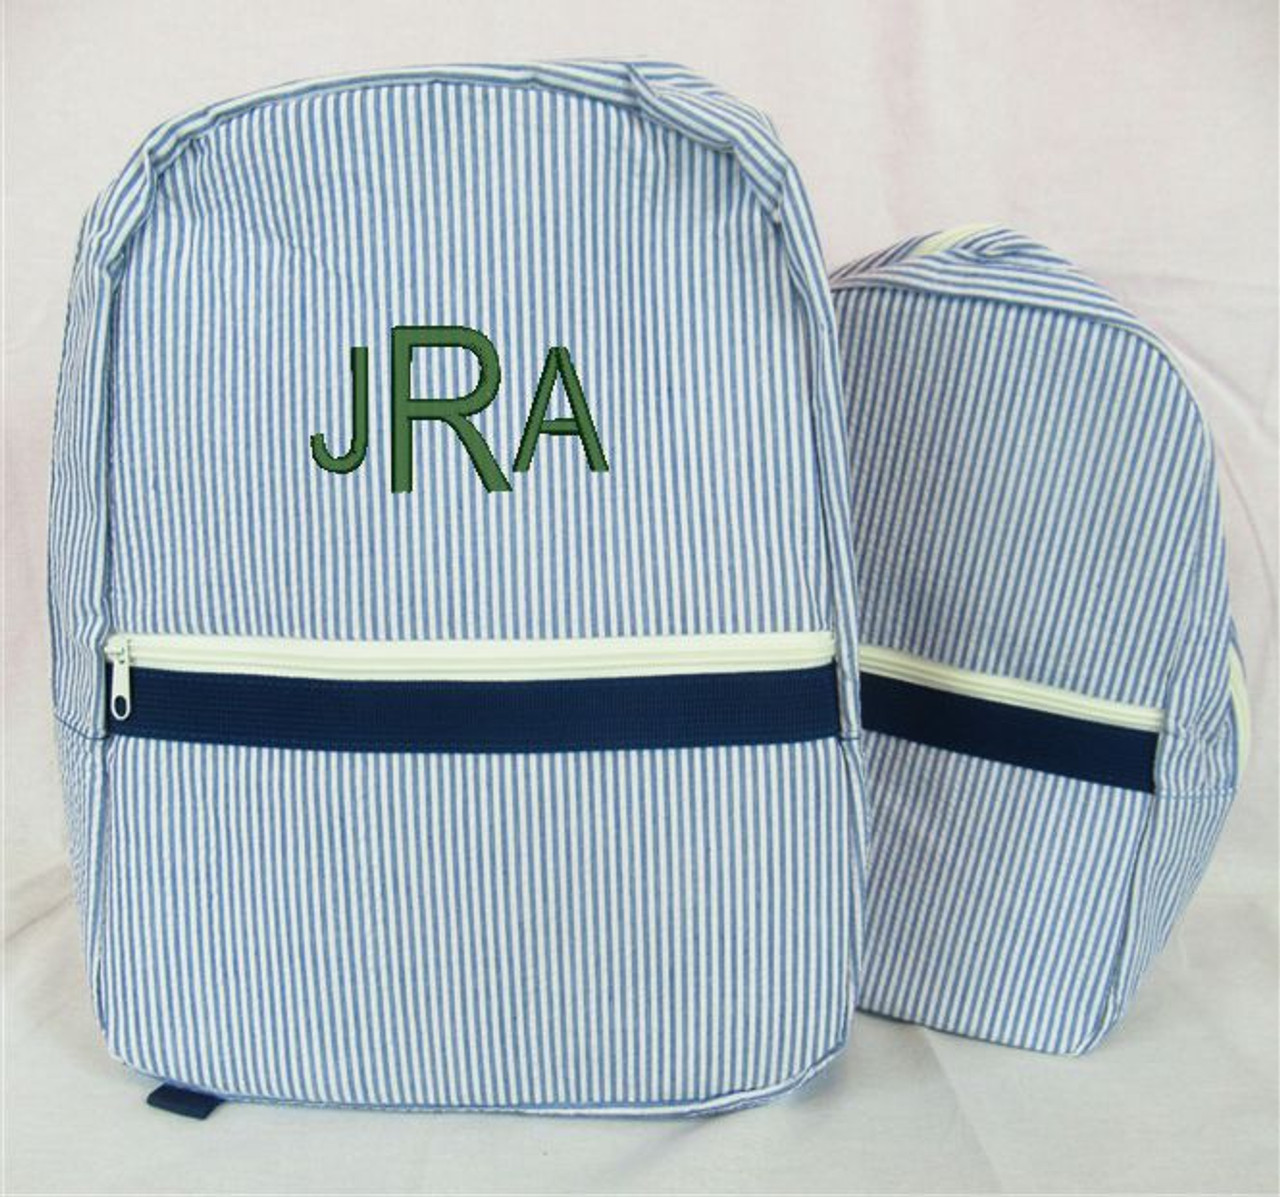 Personalized Seersucker Backpack with Name or Monogram, Seersucker